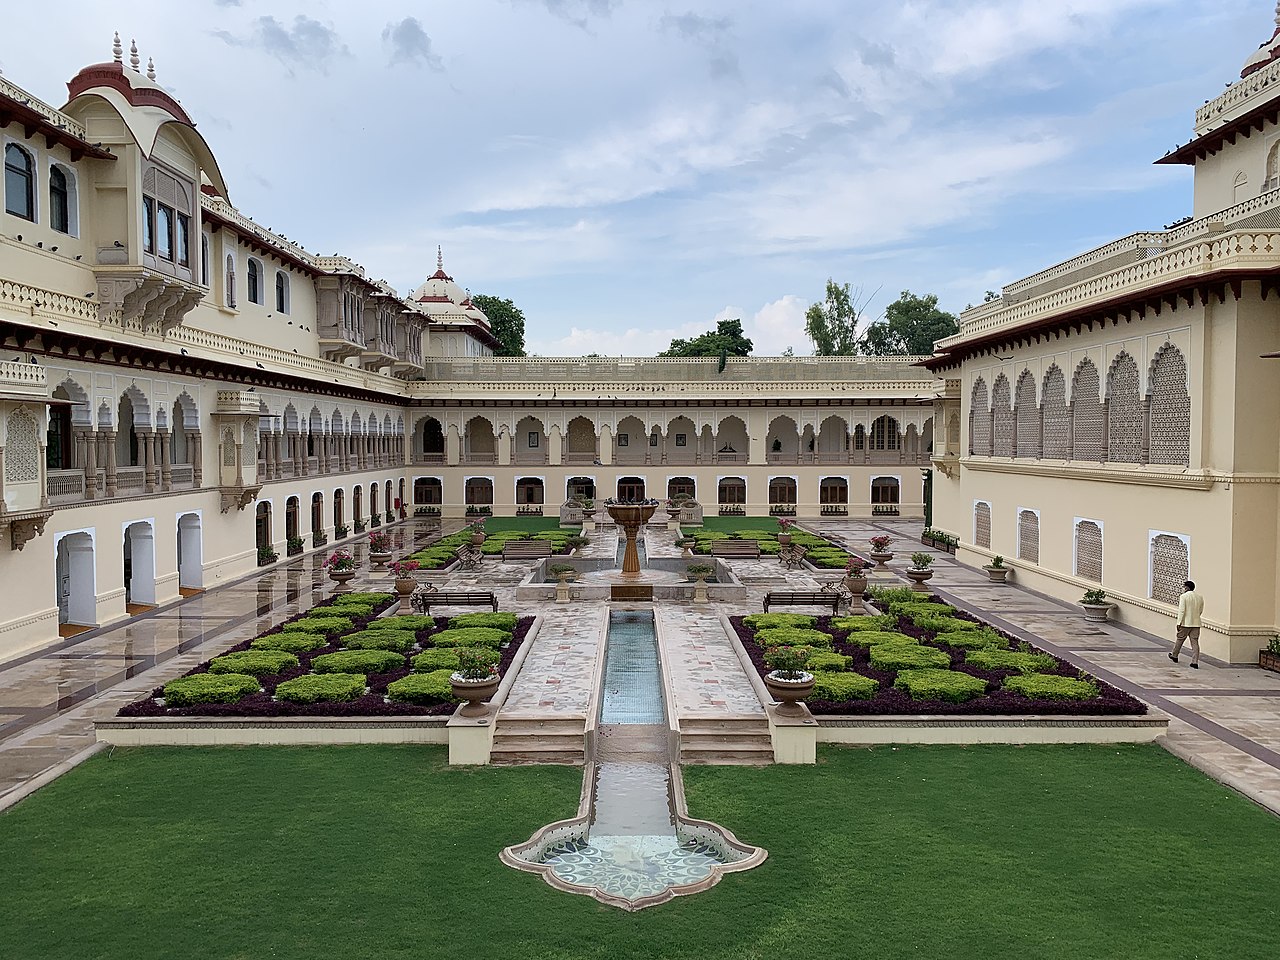   Rambagh Palace   courtyard.jpg